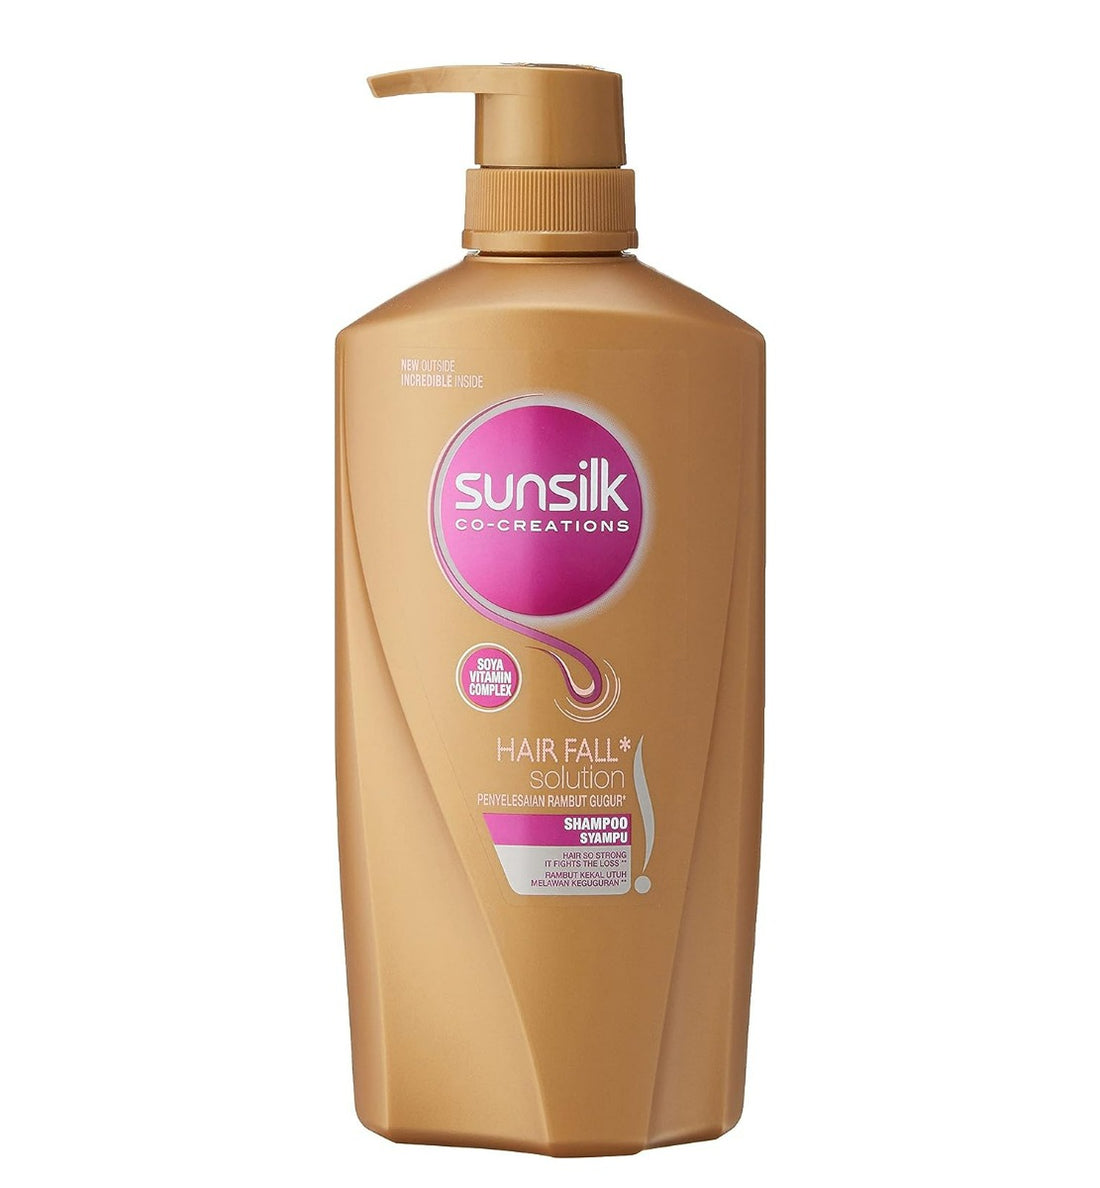 Sunsilk Co-Creations Hair Fall Solution Shampoo (625ml)